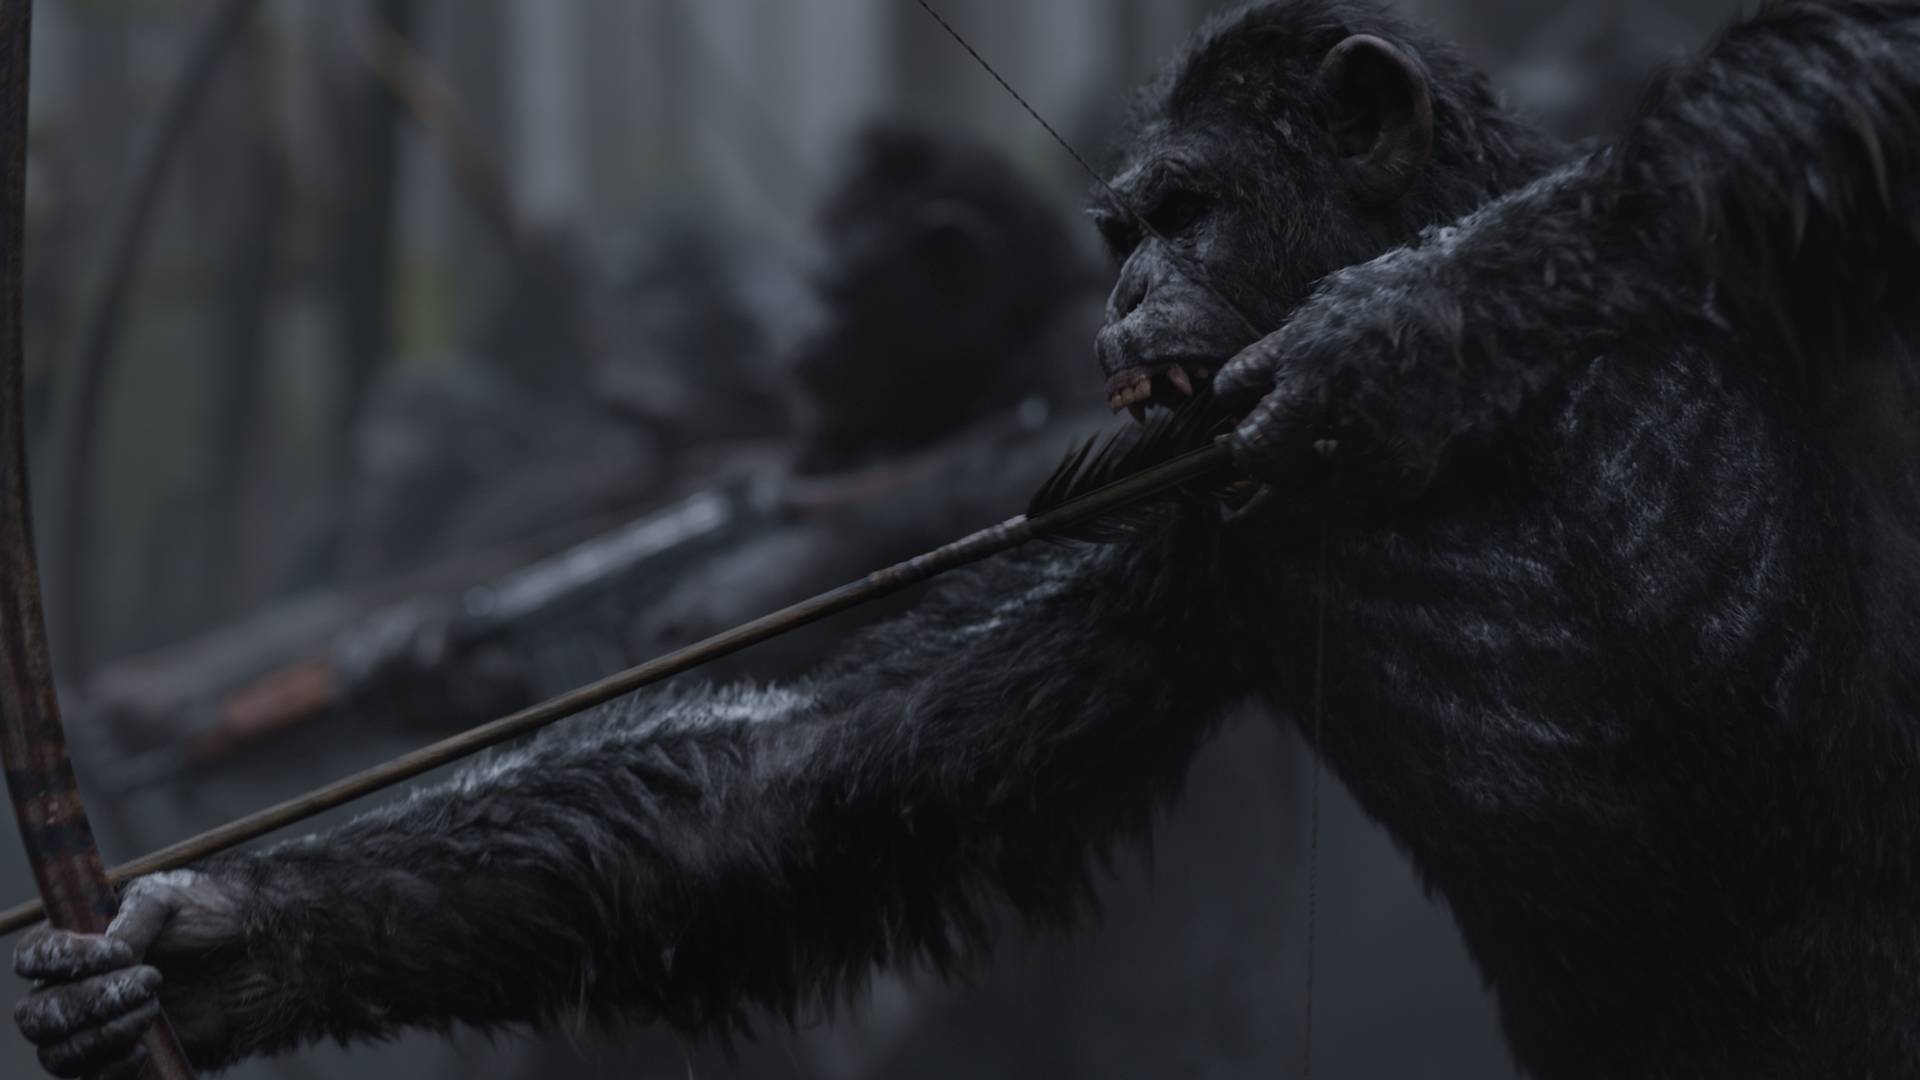 Objavljen prvi trejler za film Planeta majmuna - Rat